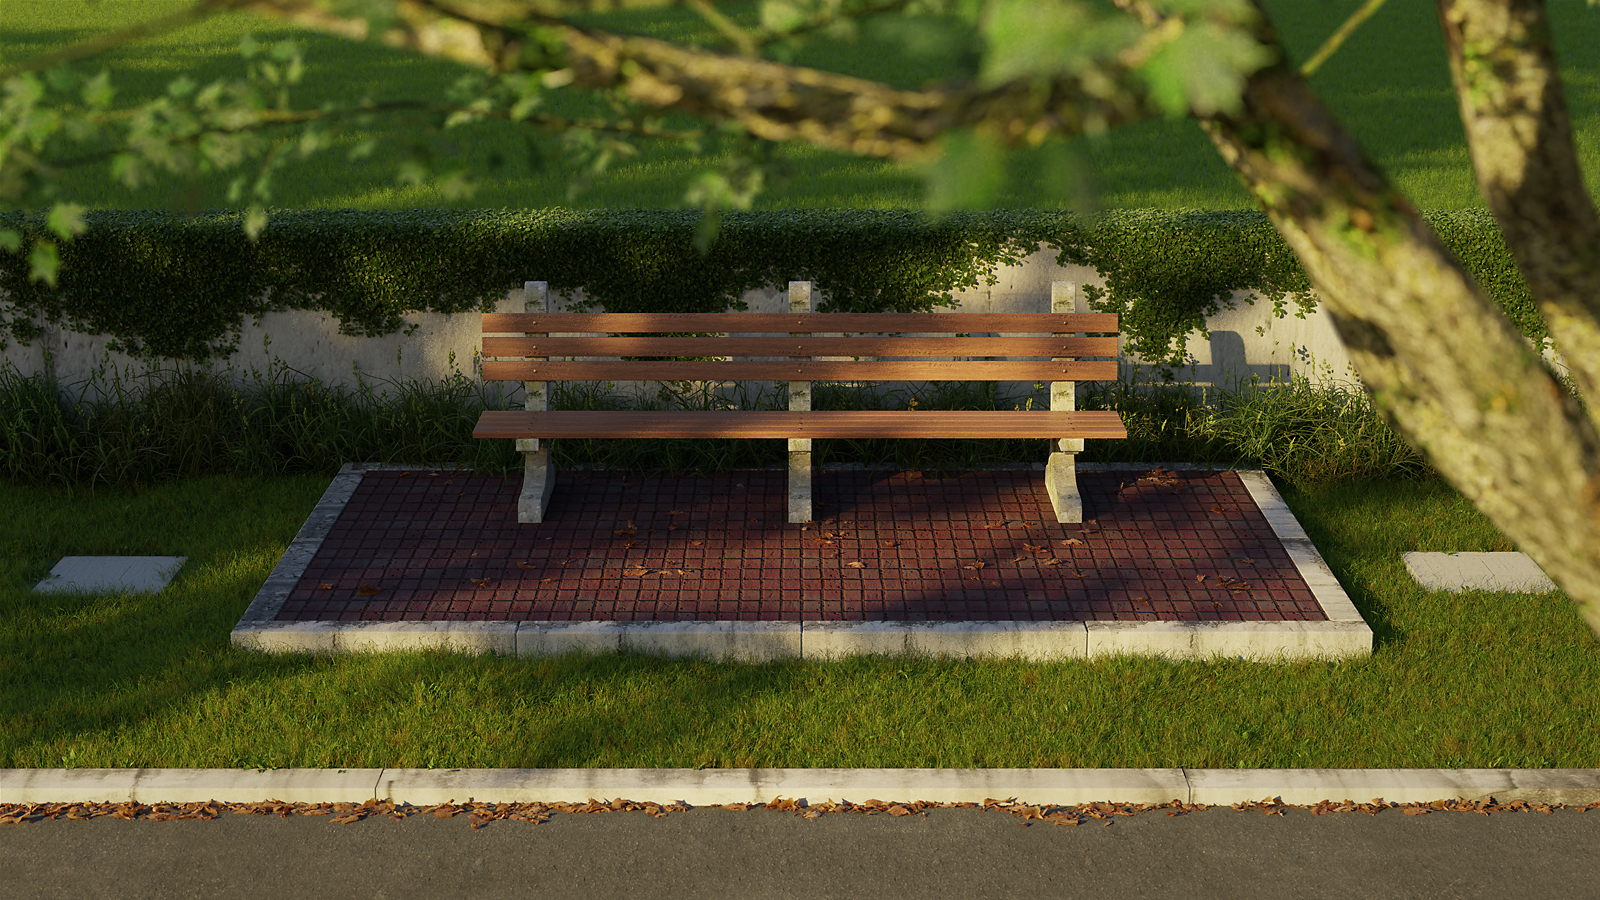 Forrest Gump Bench Scene Finished Projects Blender Artists Community